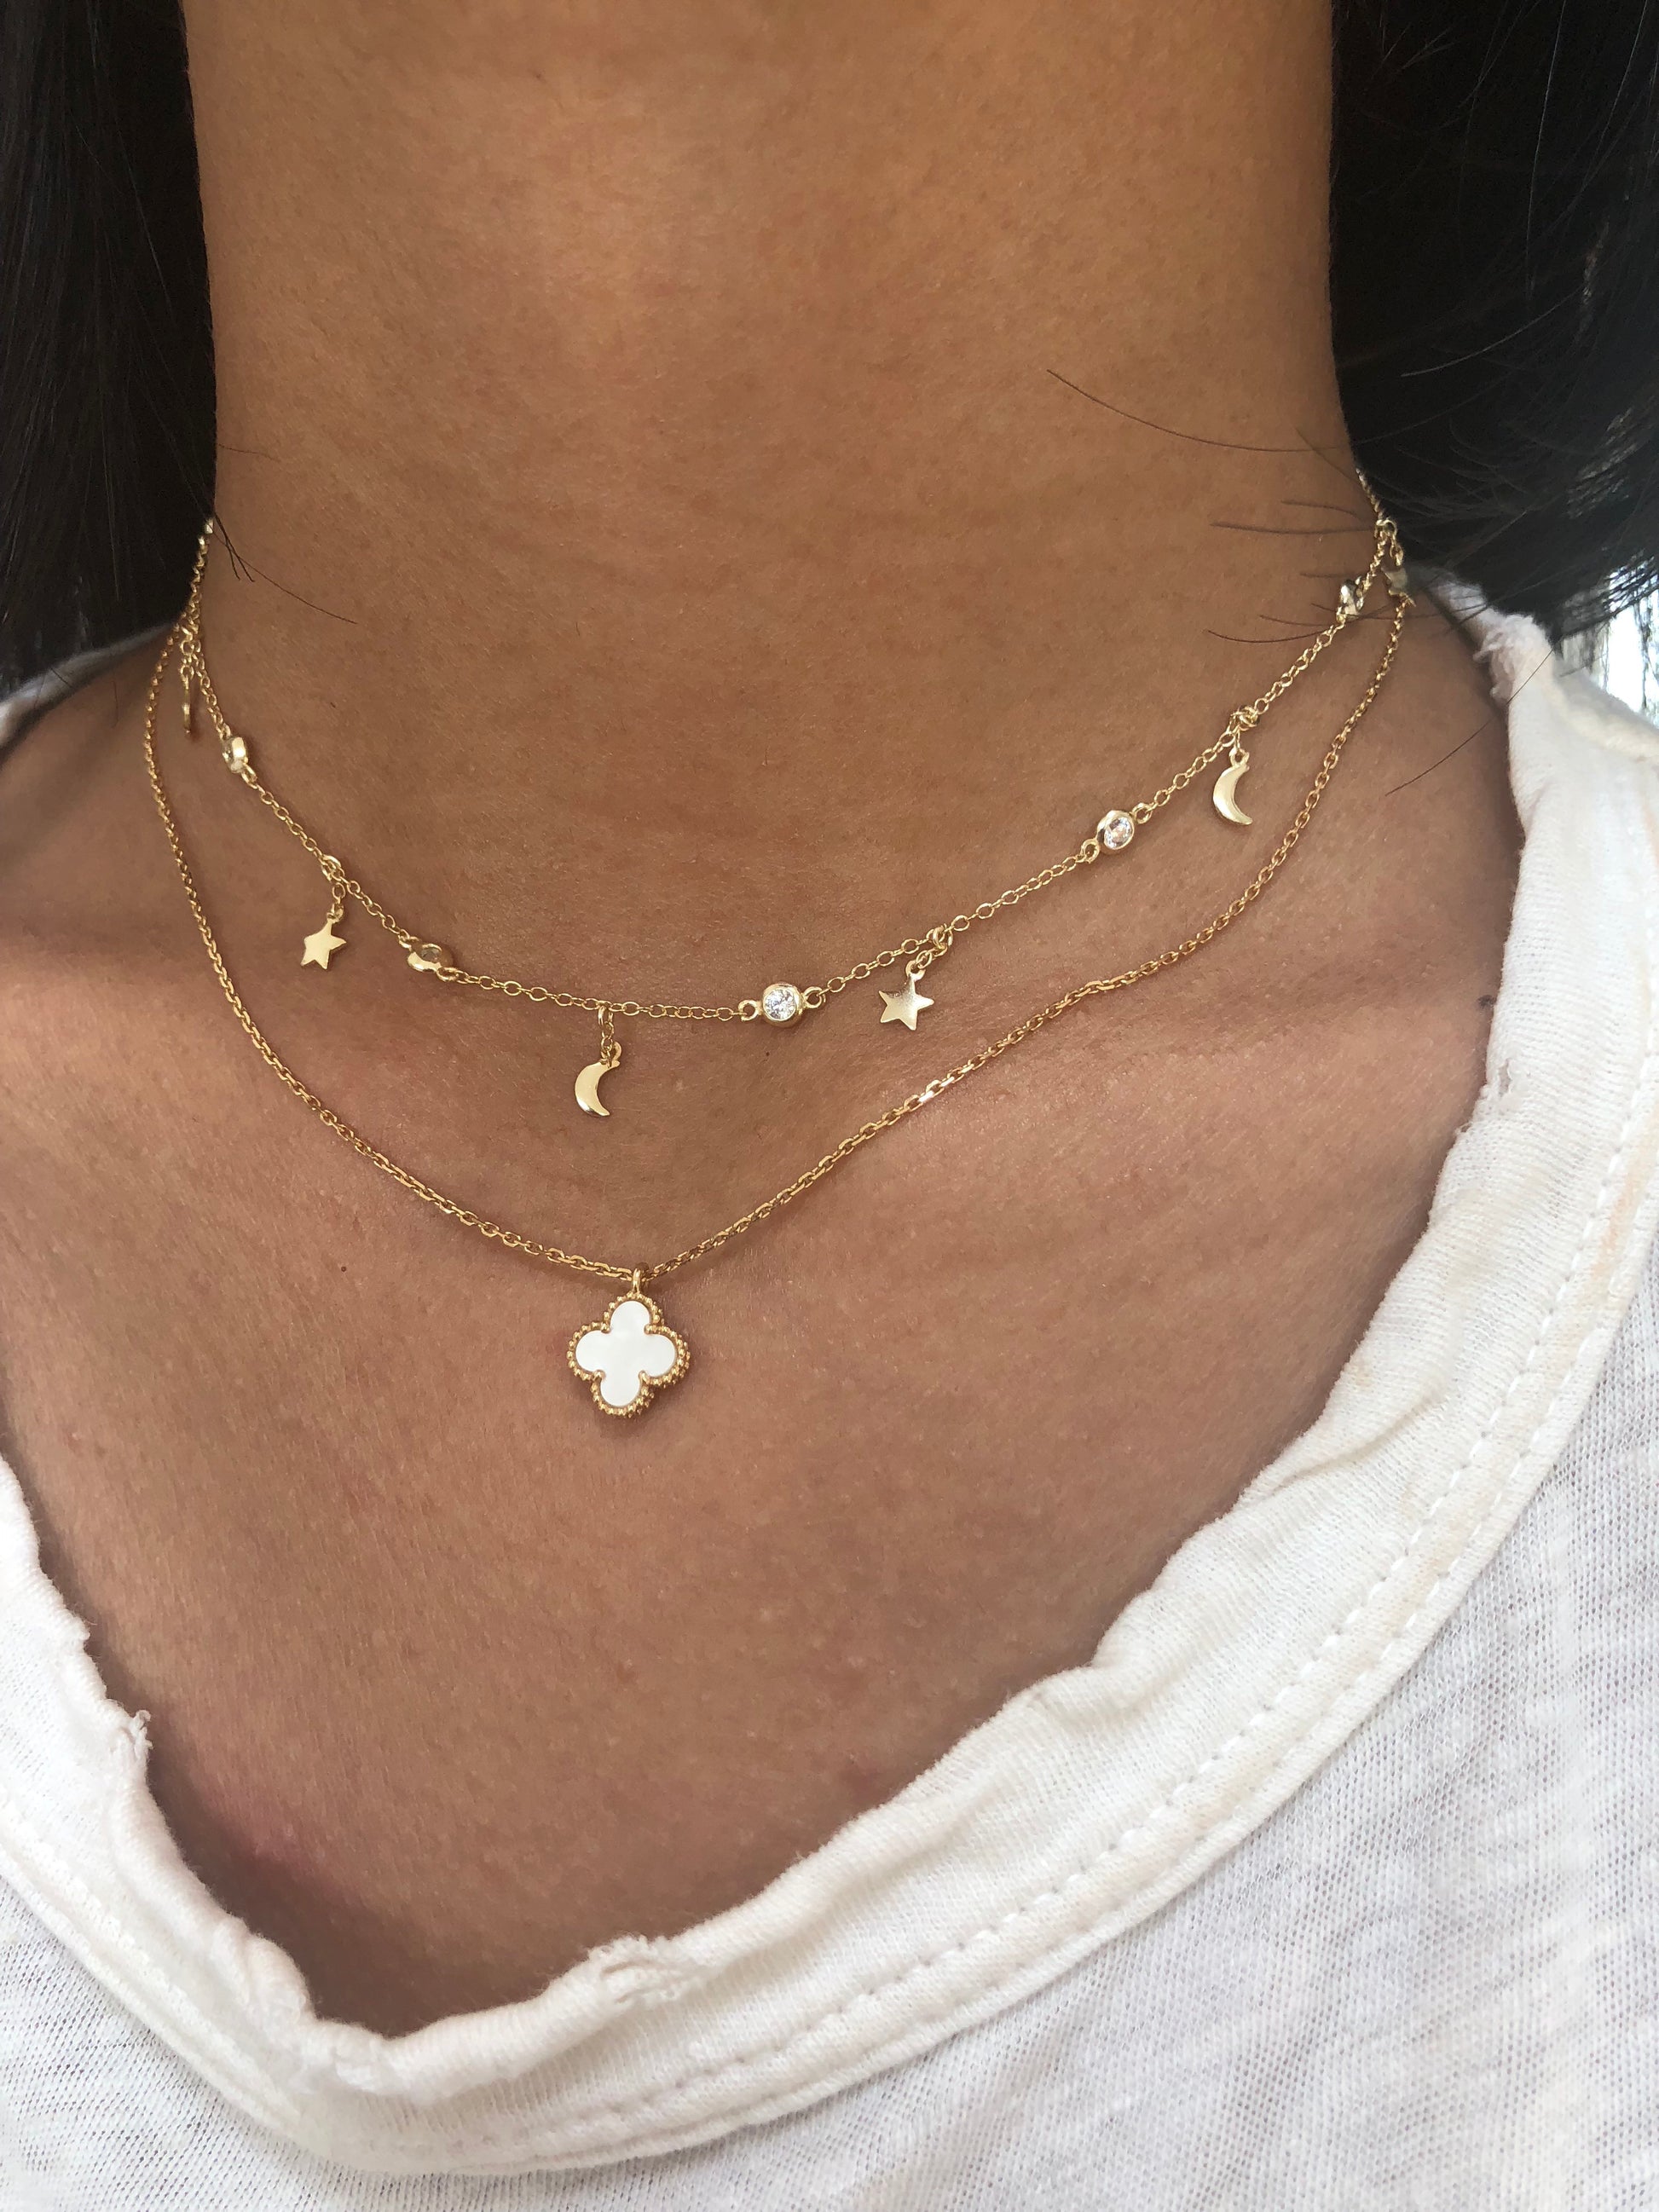 Olivia Star x Moon Choker - Retail Therapy Jewelry